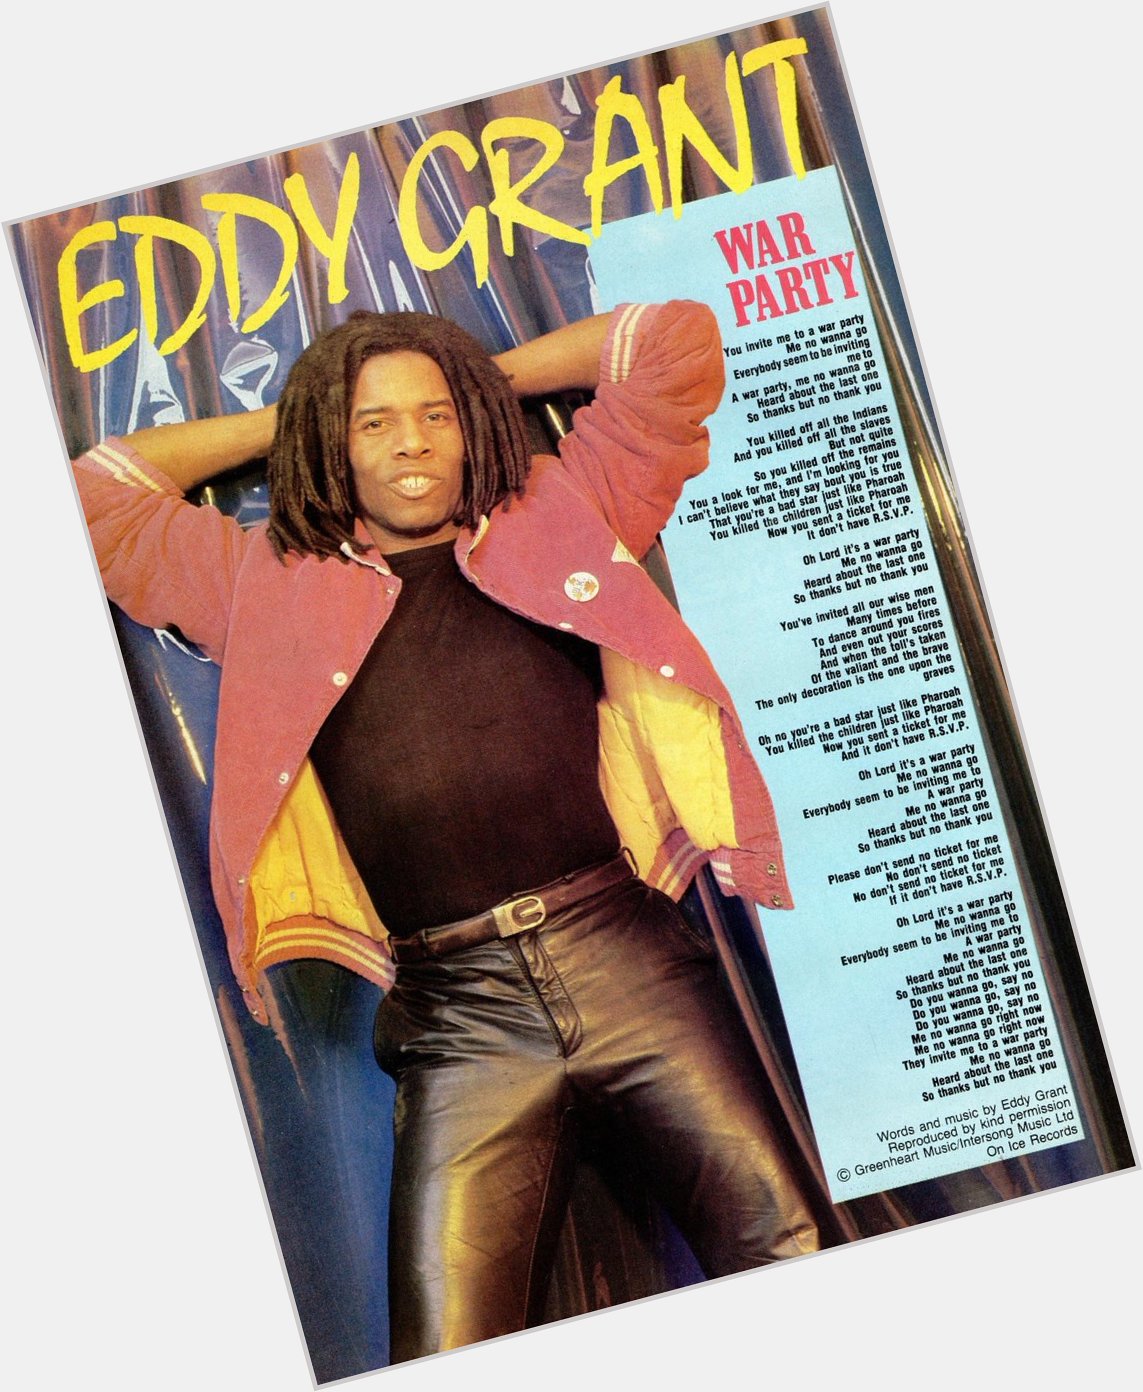 Happy birthday to Eddy Grant, 70 today! 